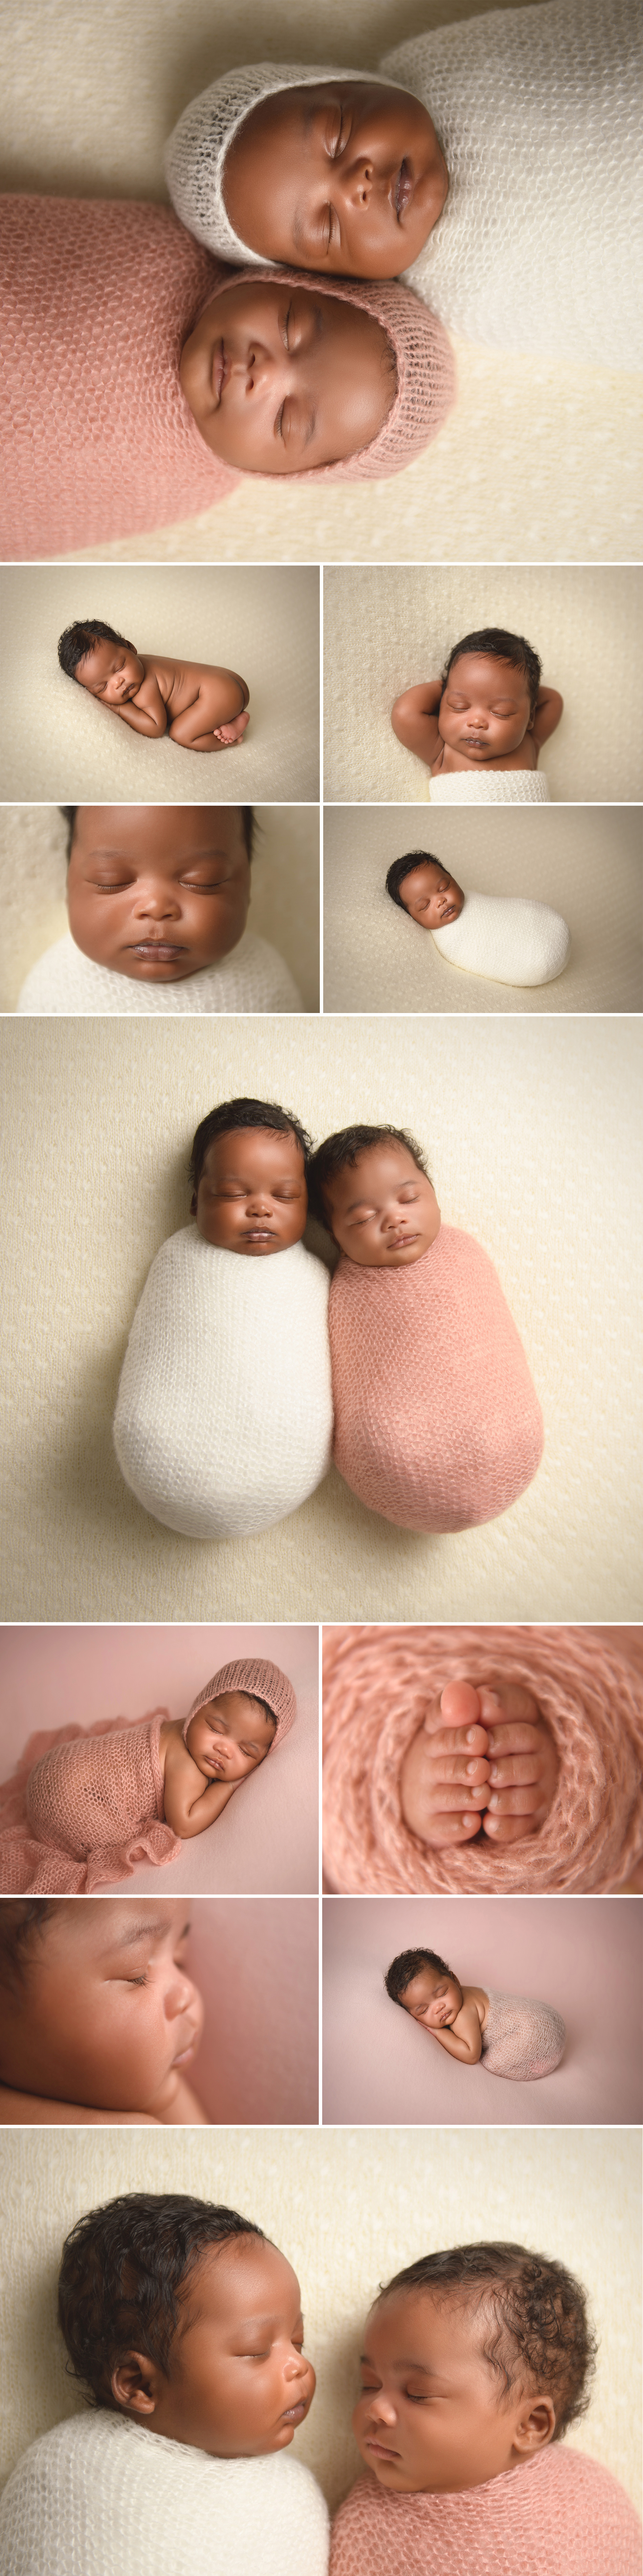 nyc newborn twins photographer studio